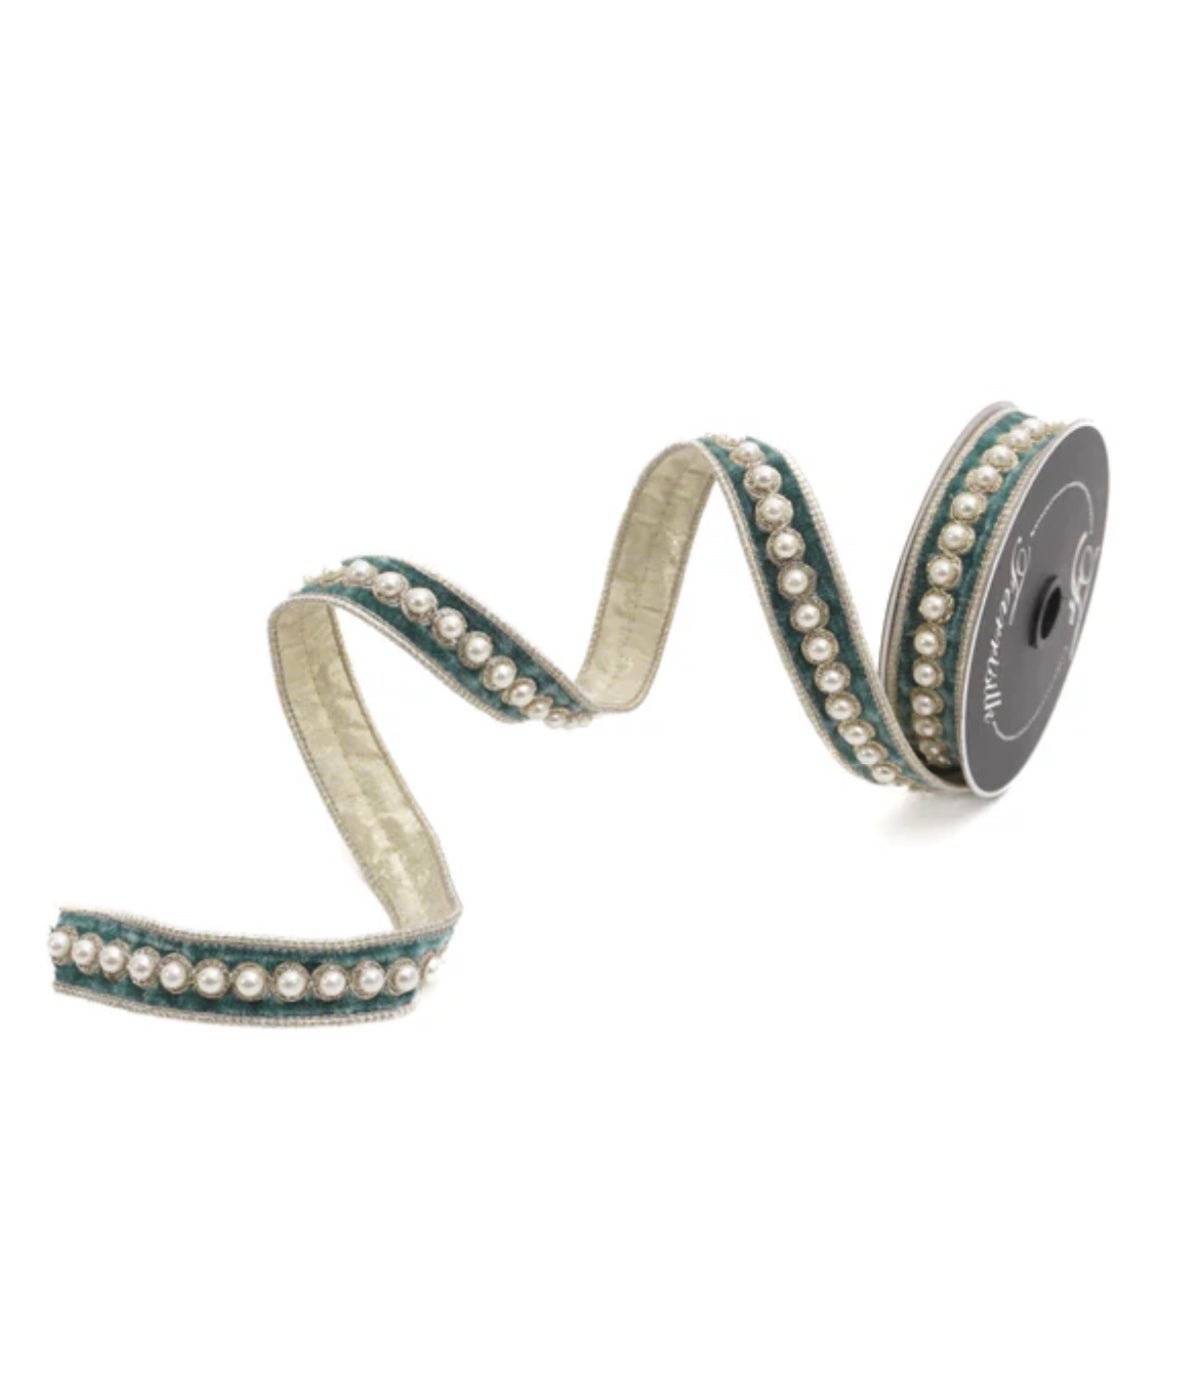 Farrisilk pearl border in celadon ribbon - 1” - Greenery Marketwired ribbonRK316-75